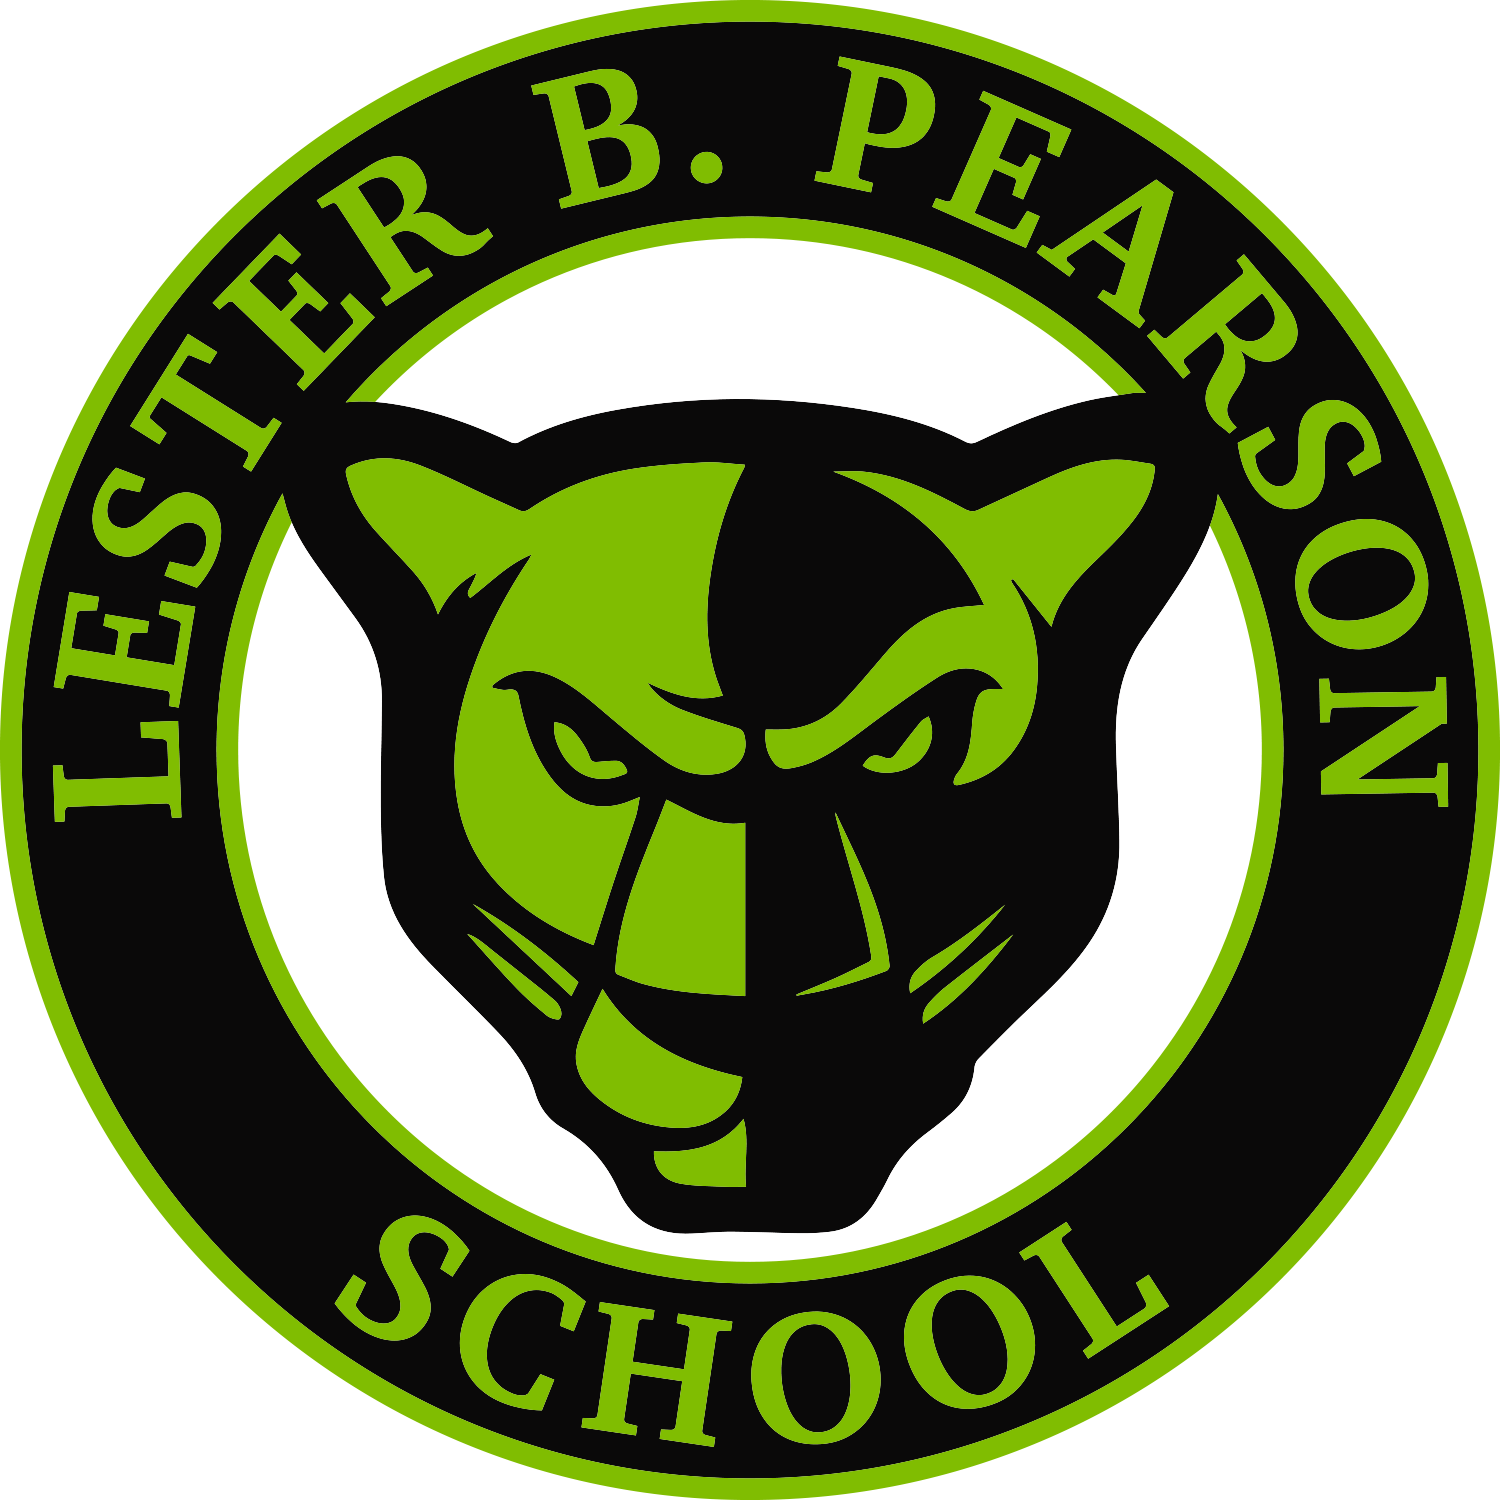 Lester B. Pearson School logo